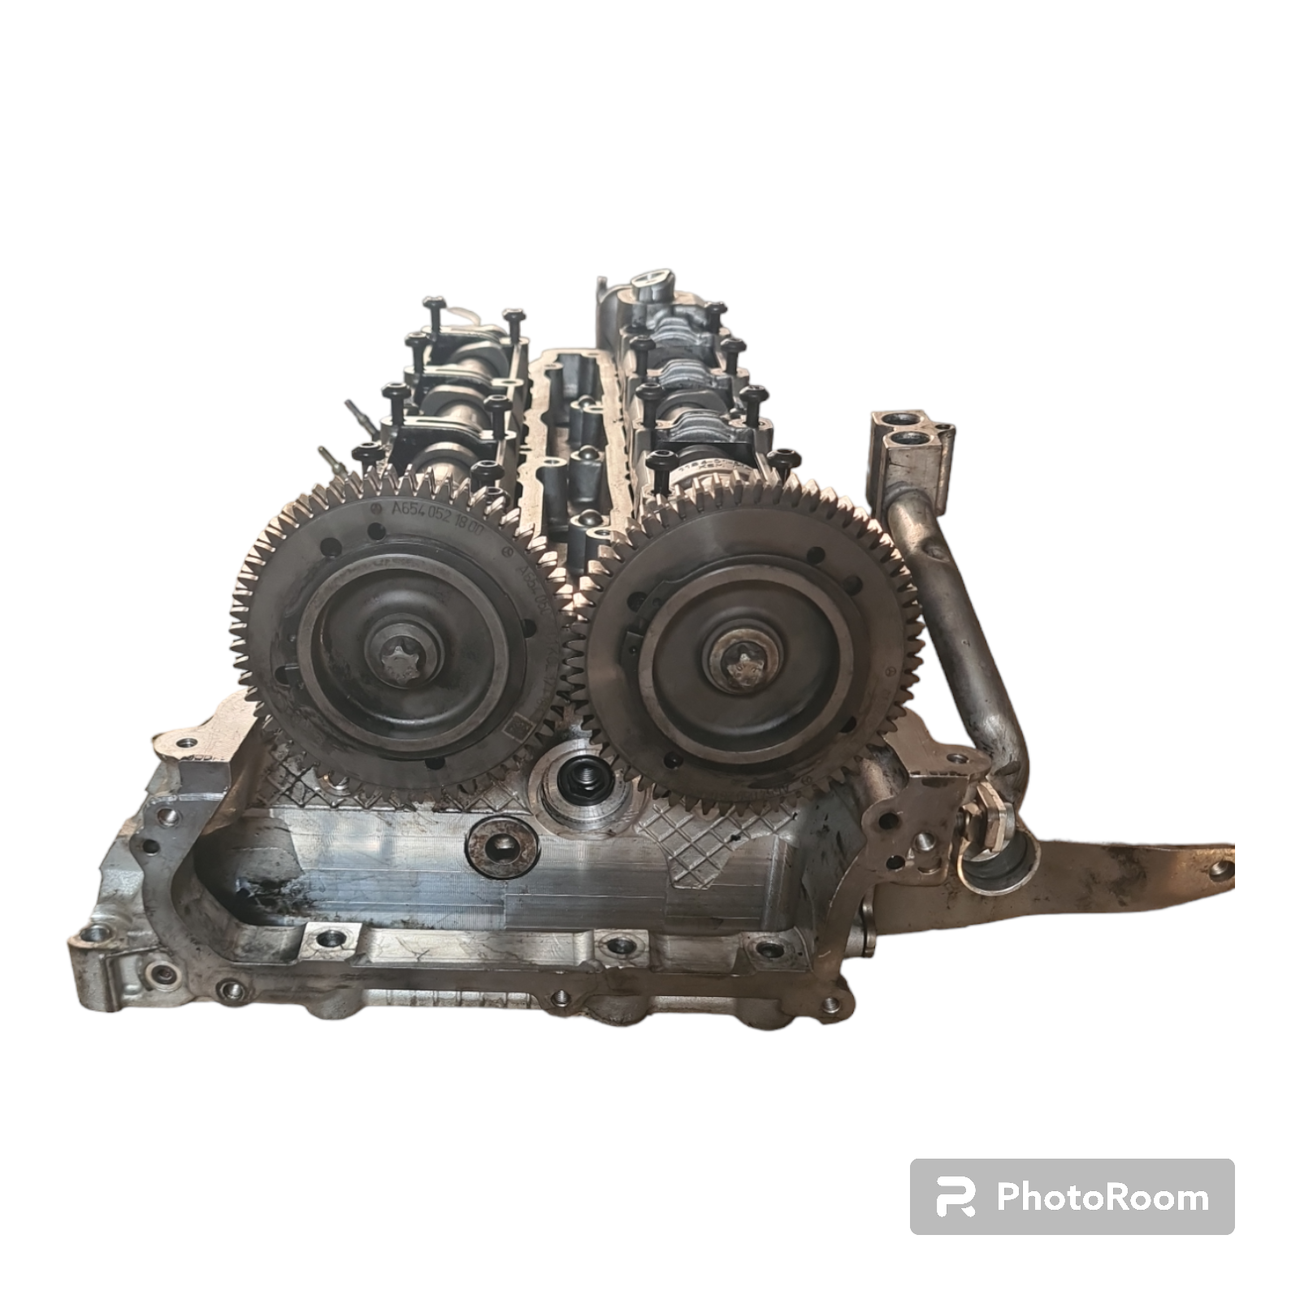 Testata motore 654.920 Mercedes E 220 cdi 2017 2.0 td Mercedes